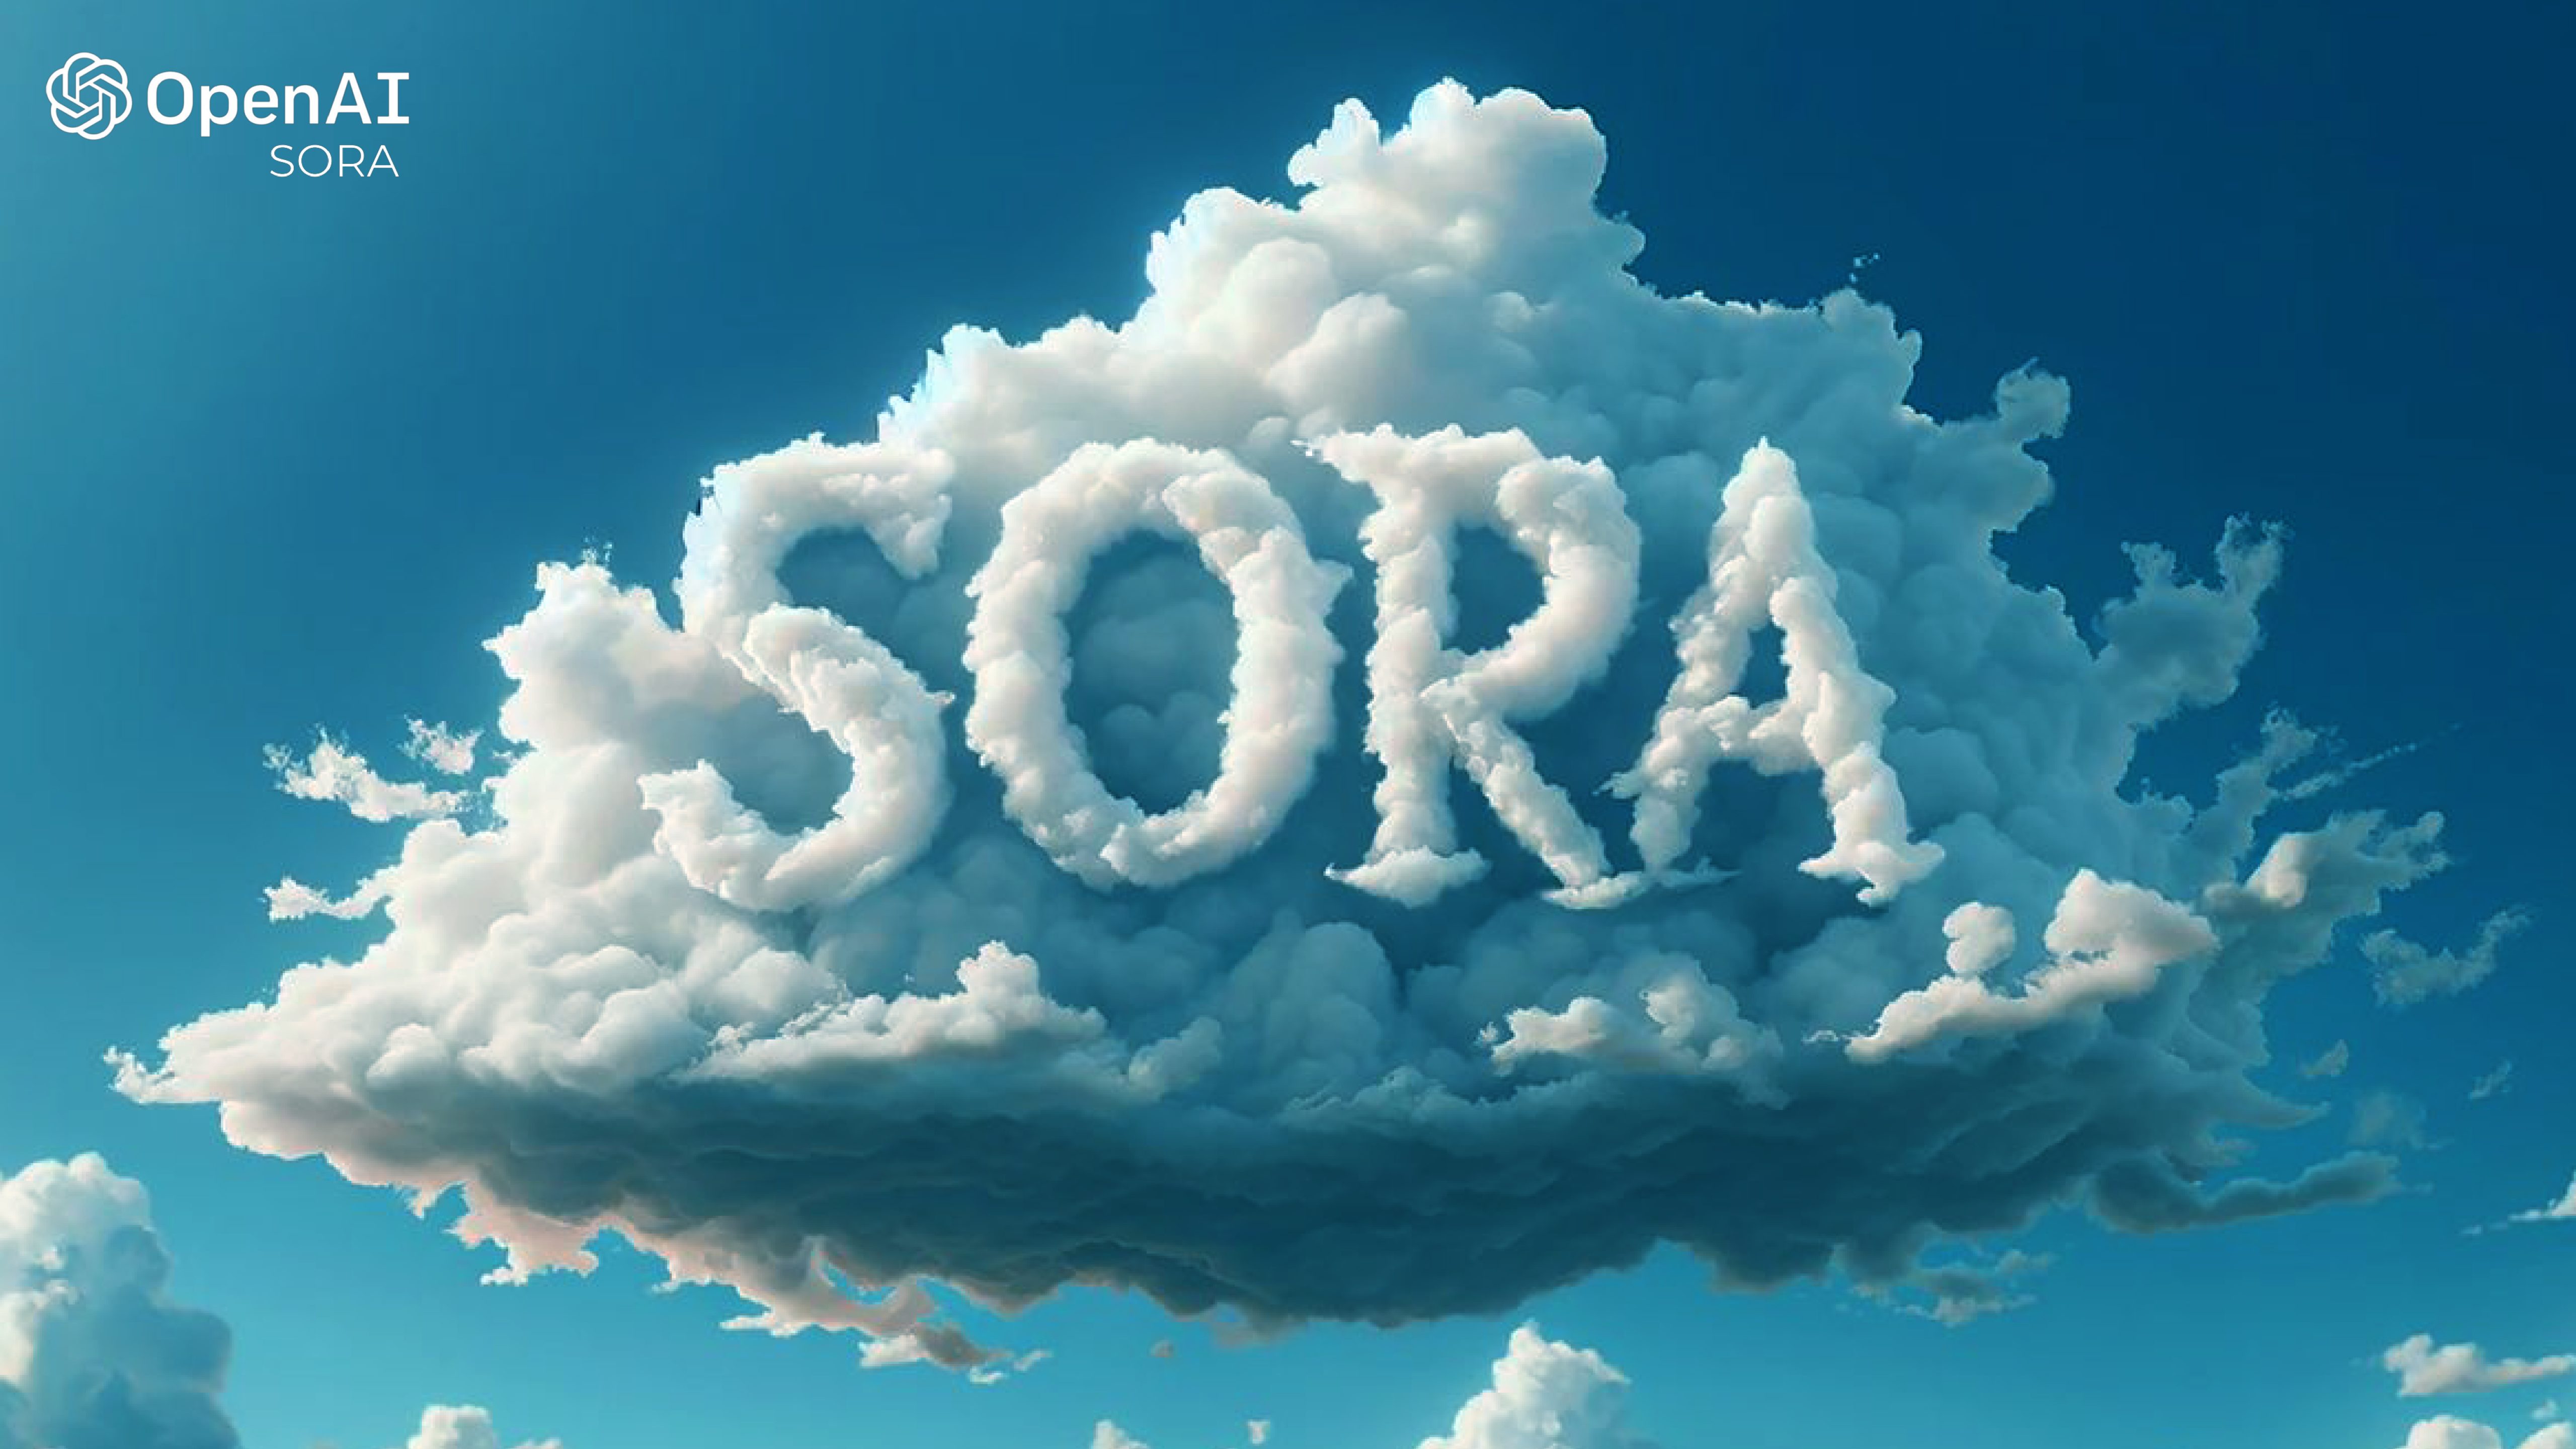 Sora AI Features